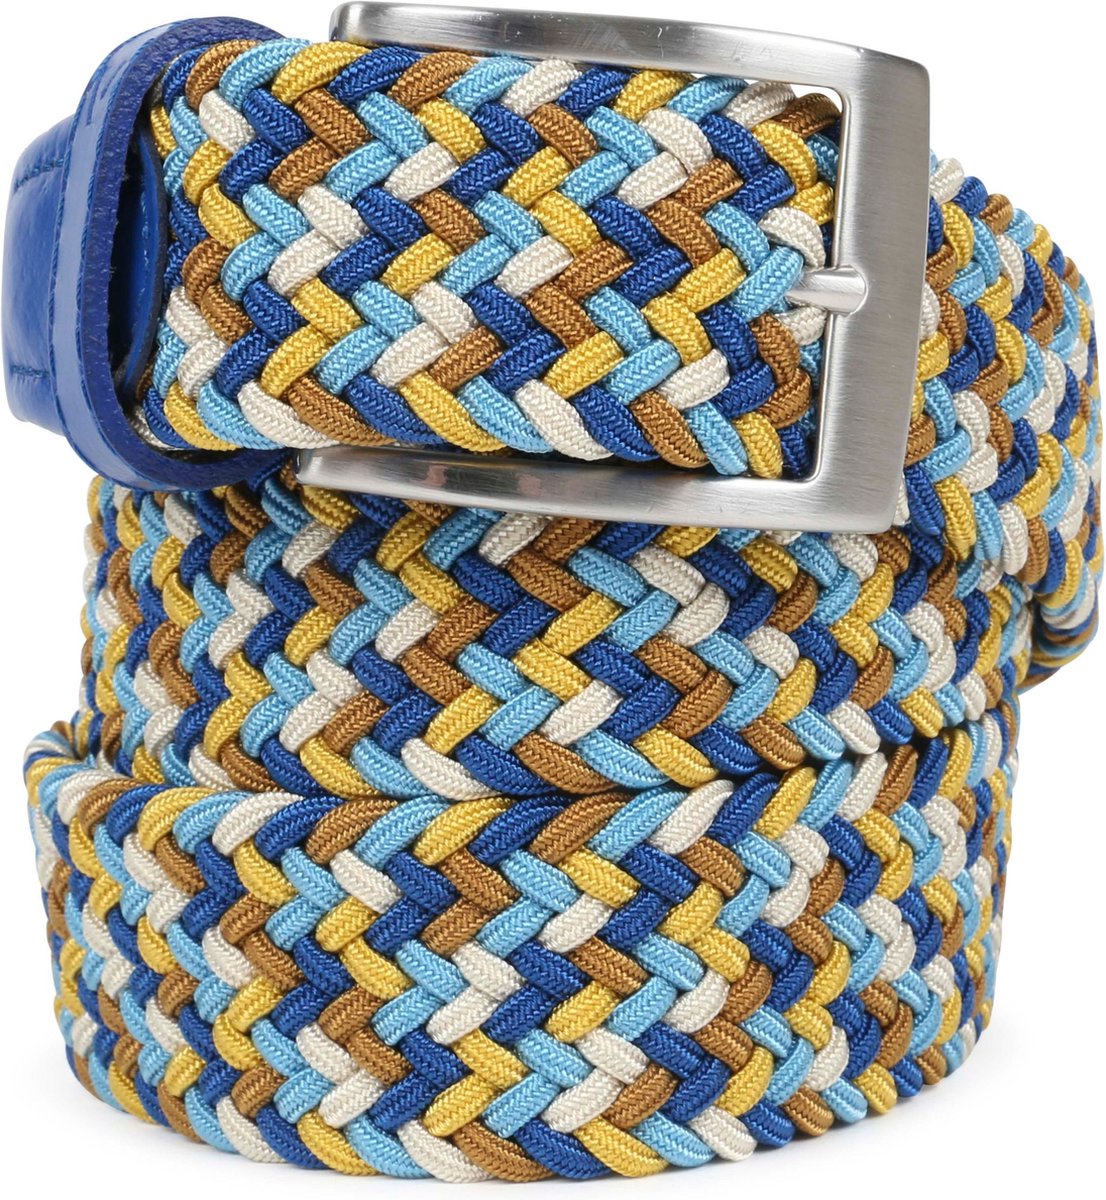 Geweven Riem Multicolour Blauw - Alberto - Taille maat 90cm - Stretch,Polyester - Dames & Heren riem Print